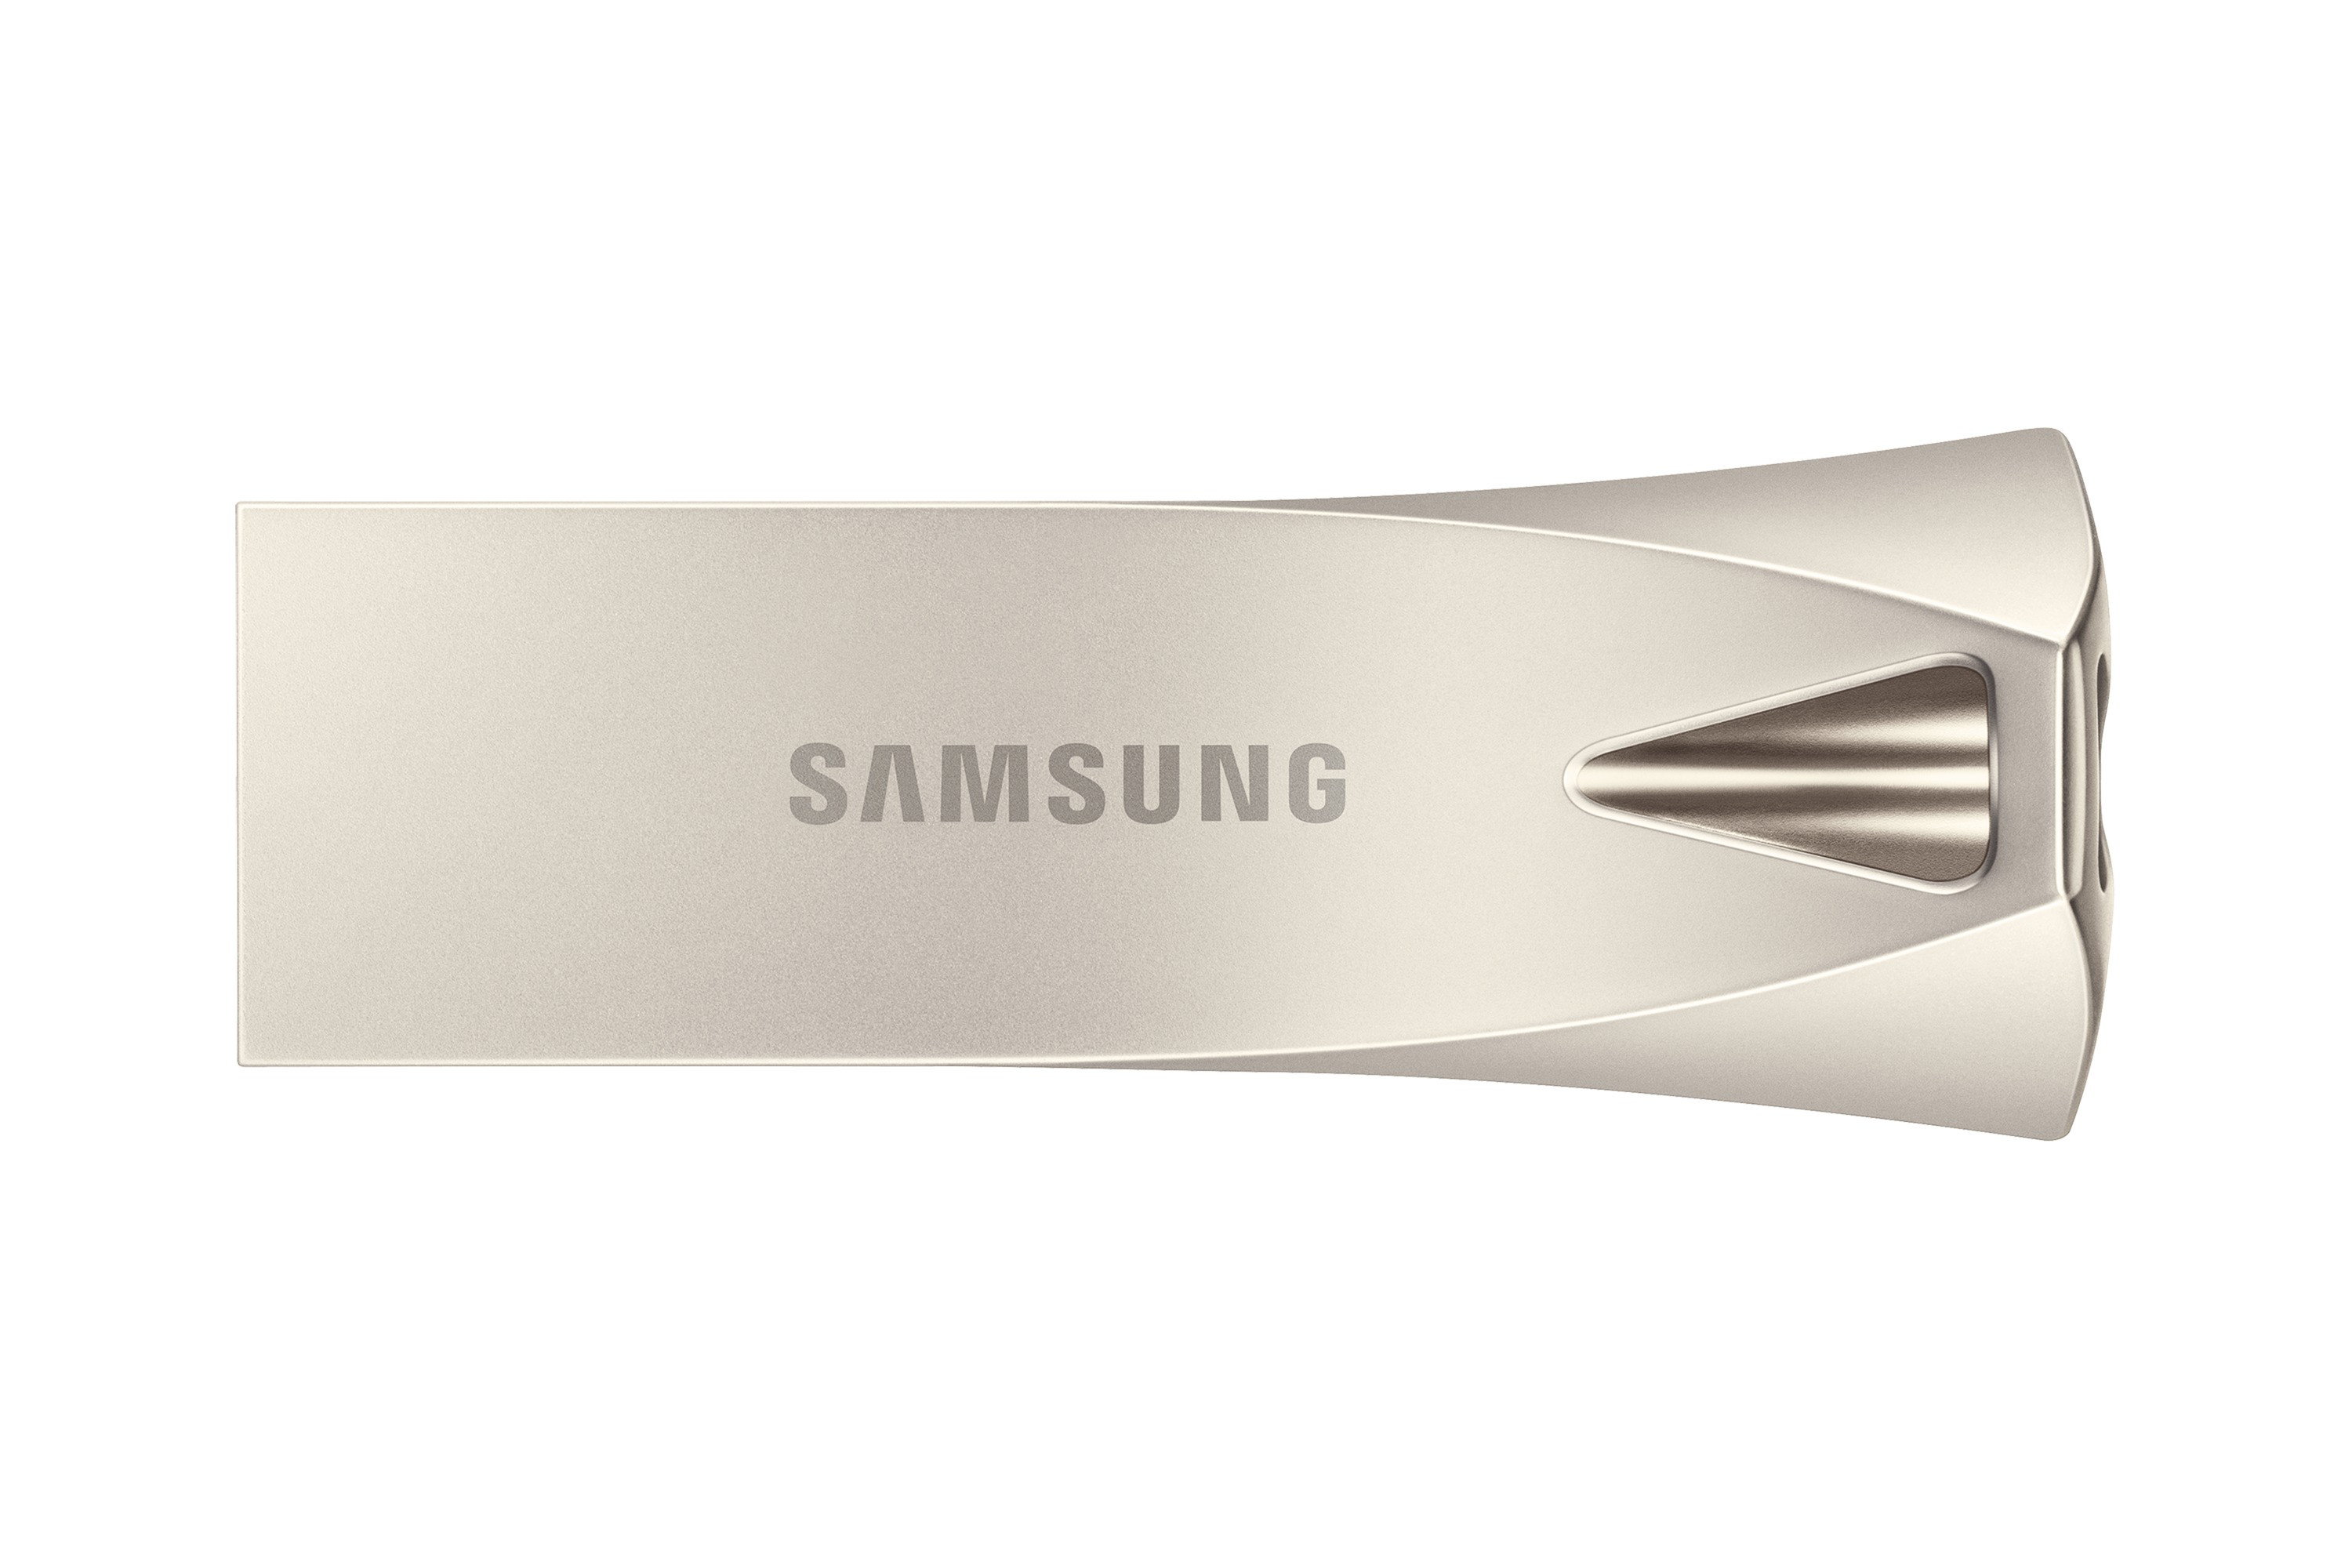 Samsung BAR Plus USB Stick 128GB USB-sticks Zilver